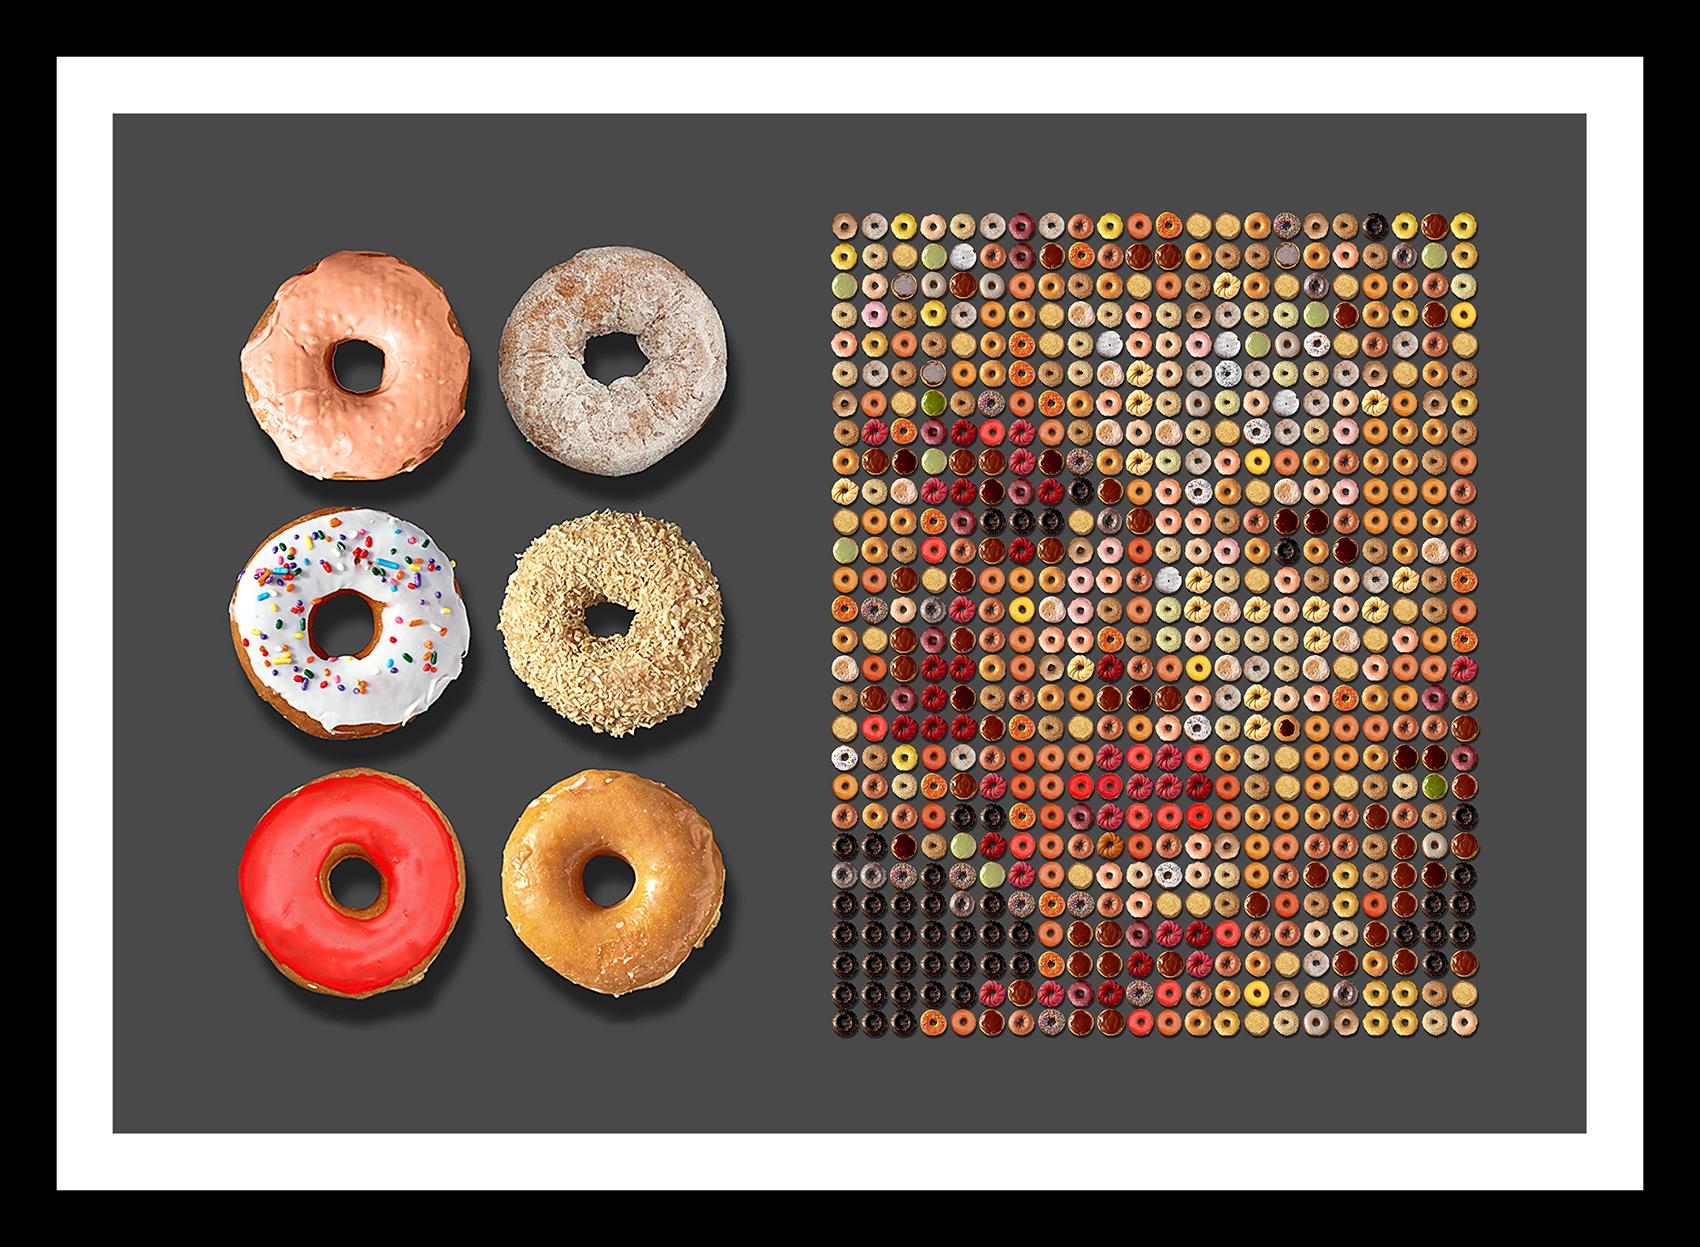 Candice CMC Color Photograph - "Marilyn with Half Dozen Donuts" Pop Photographic portrait arrangement of donuts